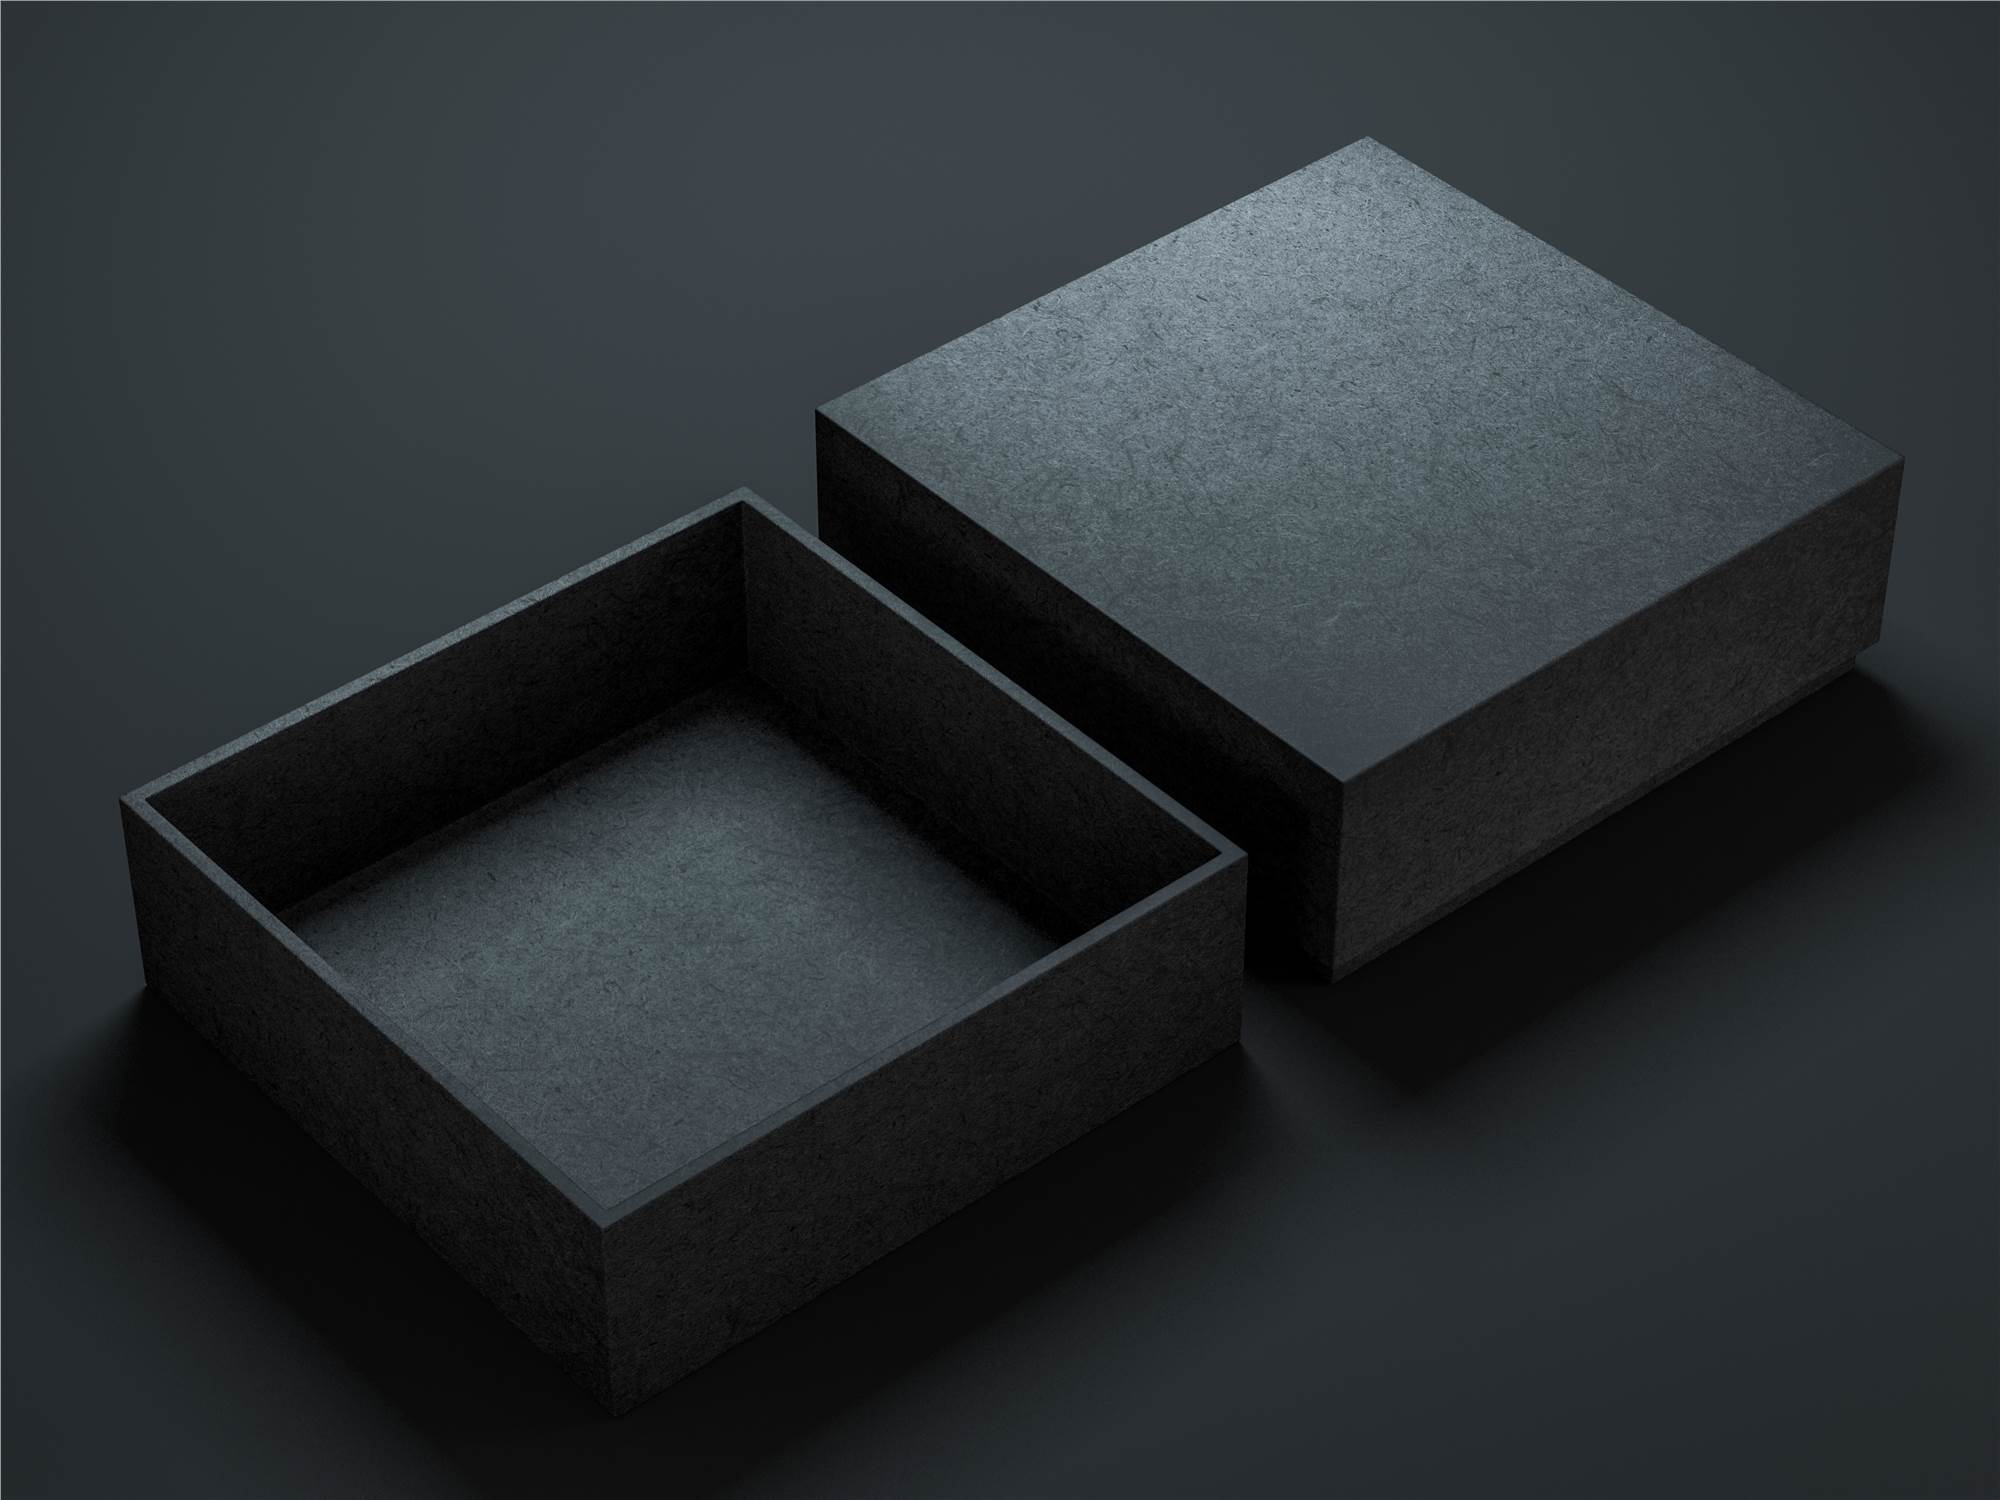 Two-Piece Box